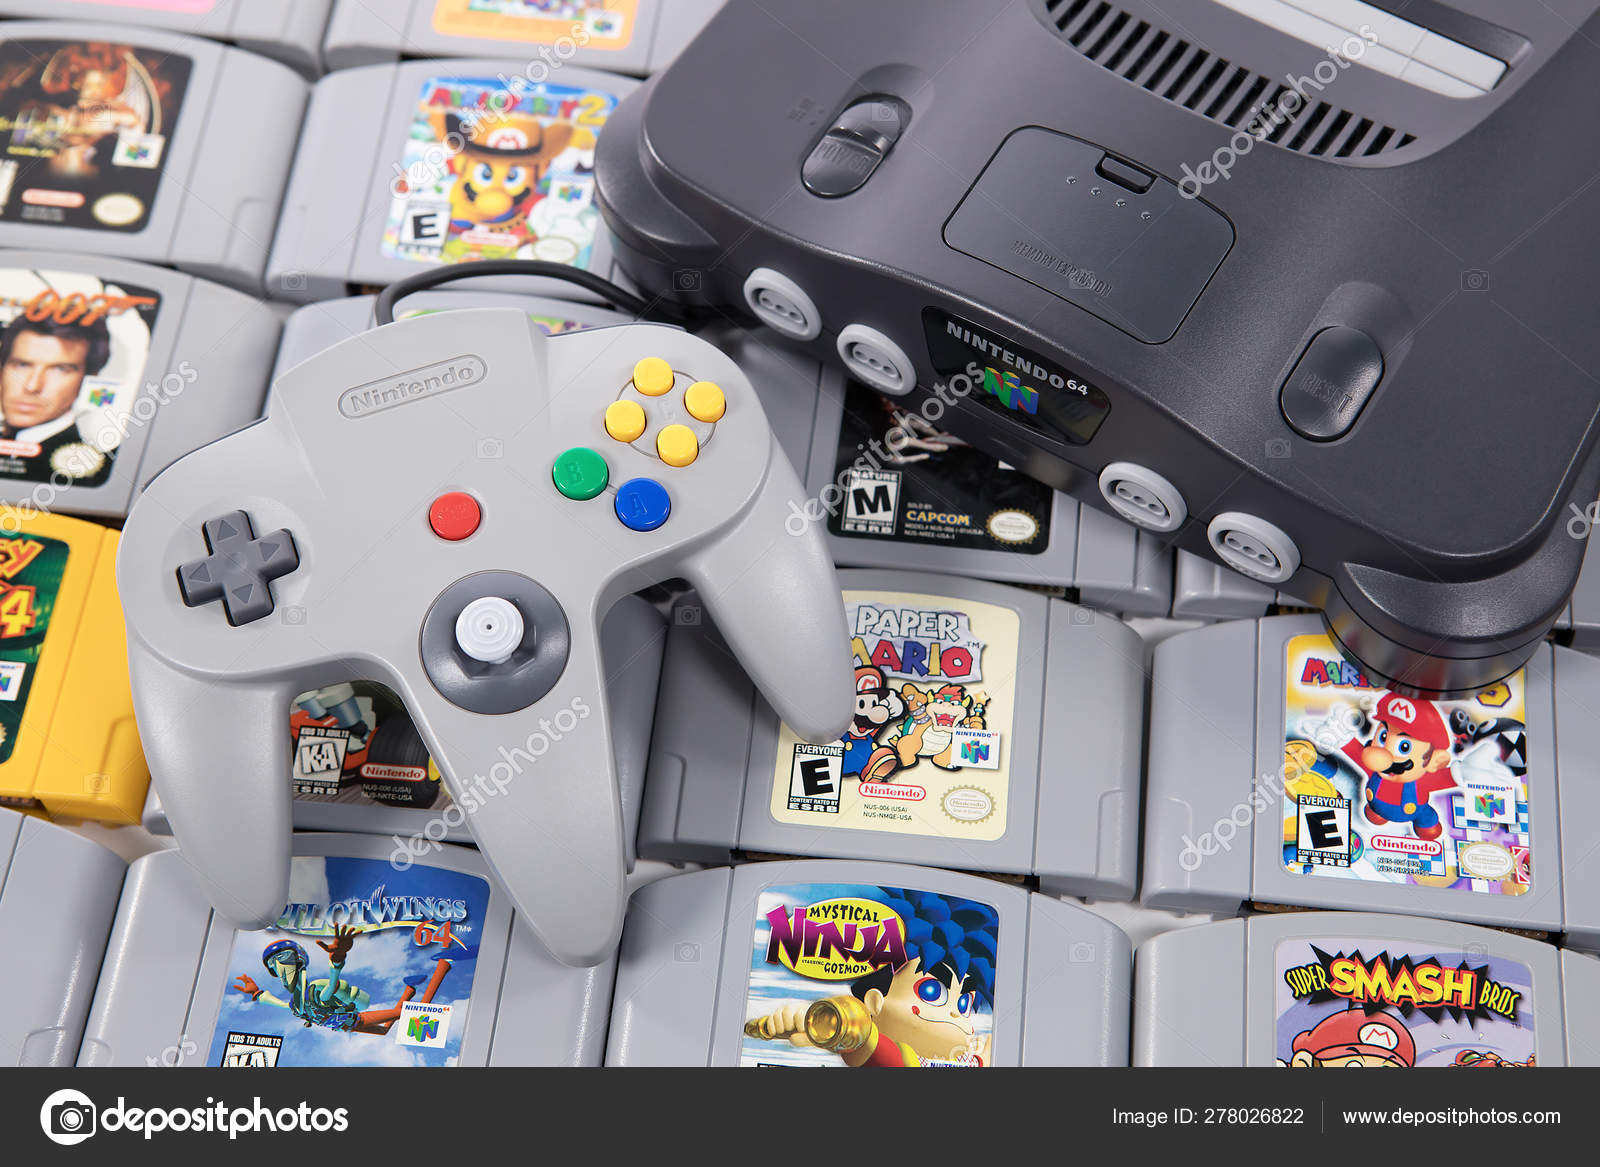 Classic Retro Video Gaming on the Nintendo N64 – Stock Editorial Photo ©  robtek #278026822